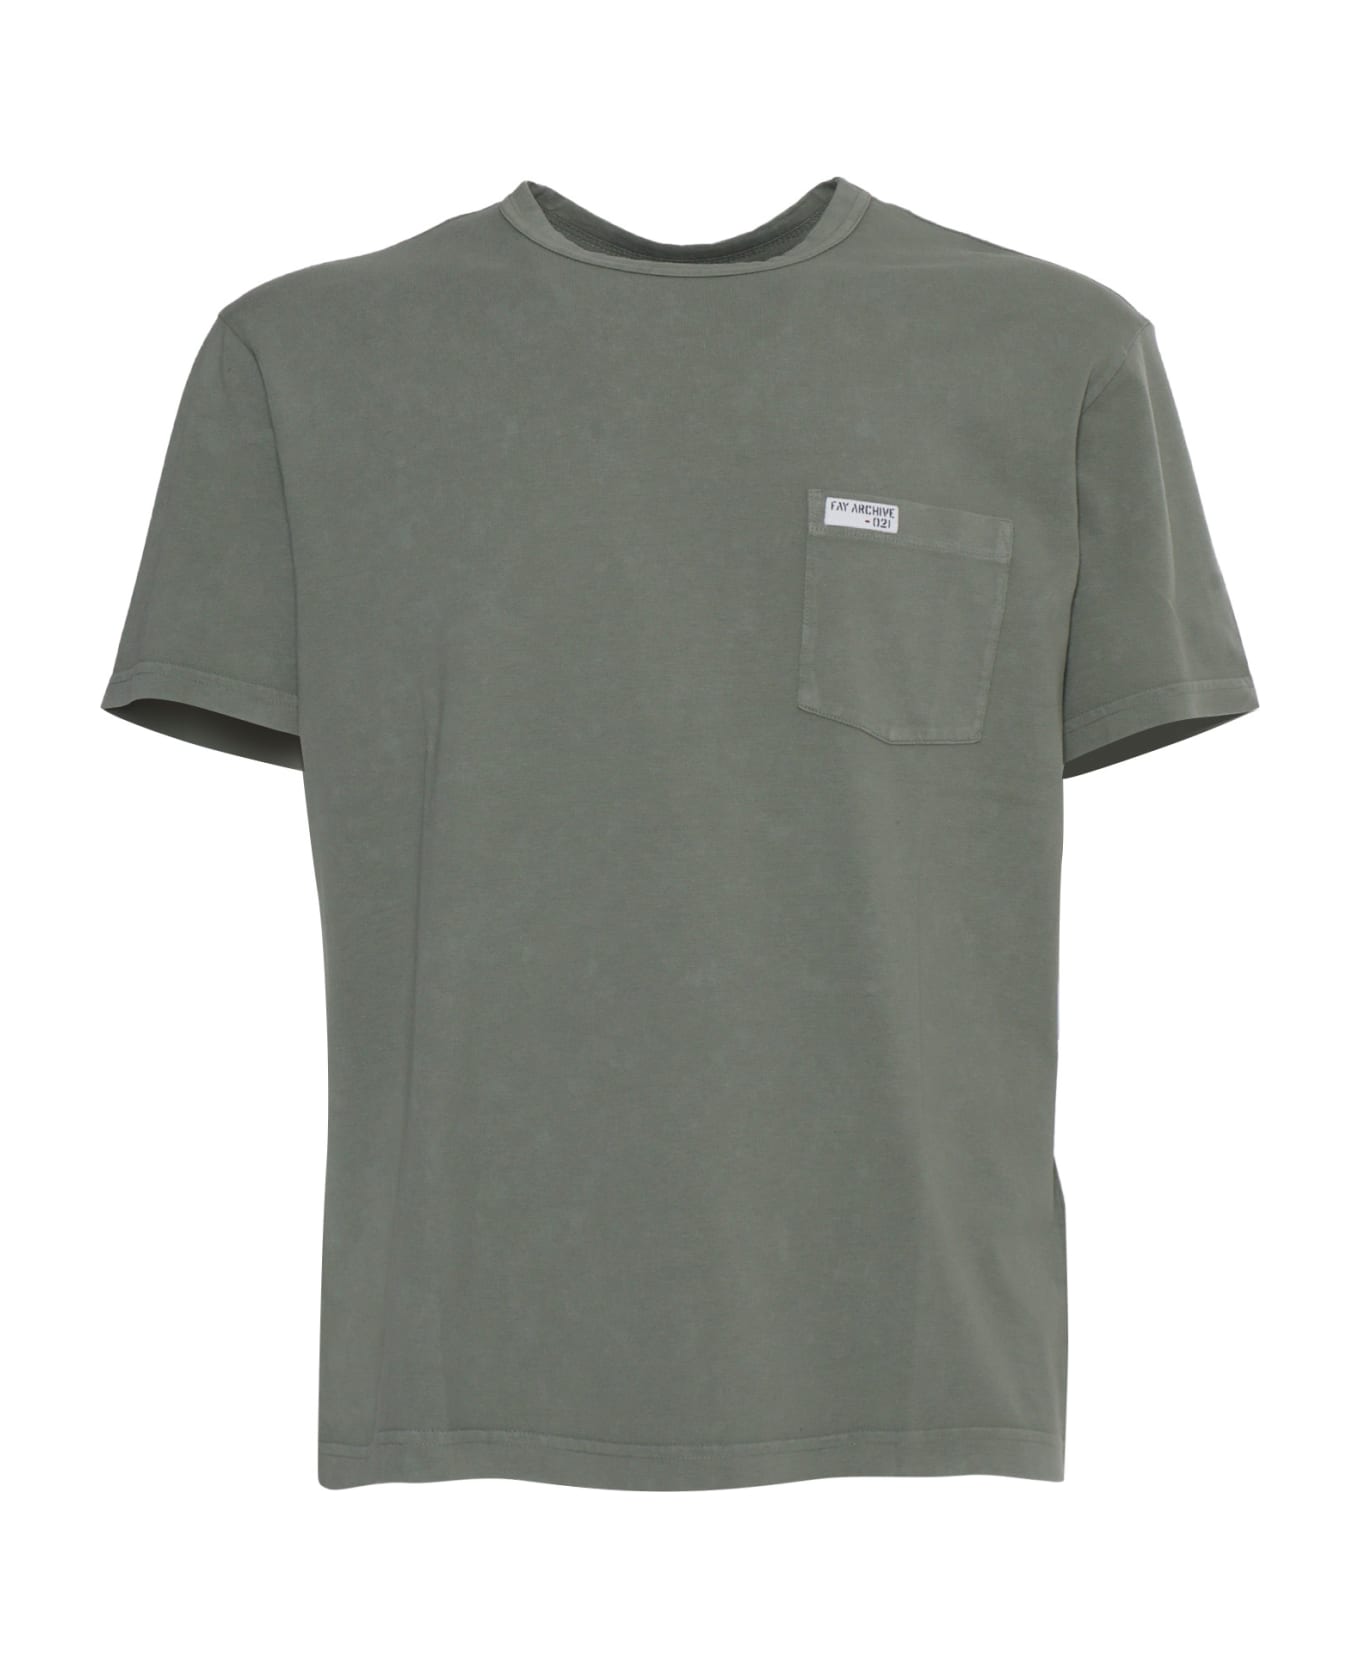 Fay Green Military T-shirt - GREEN